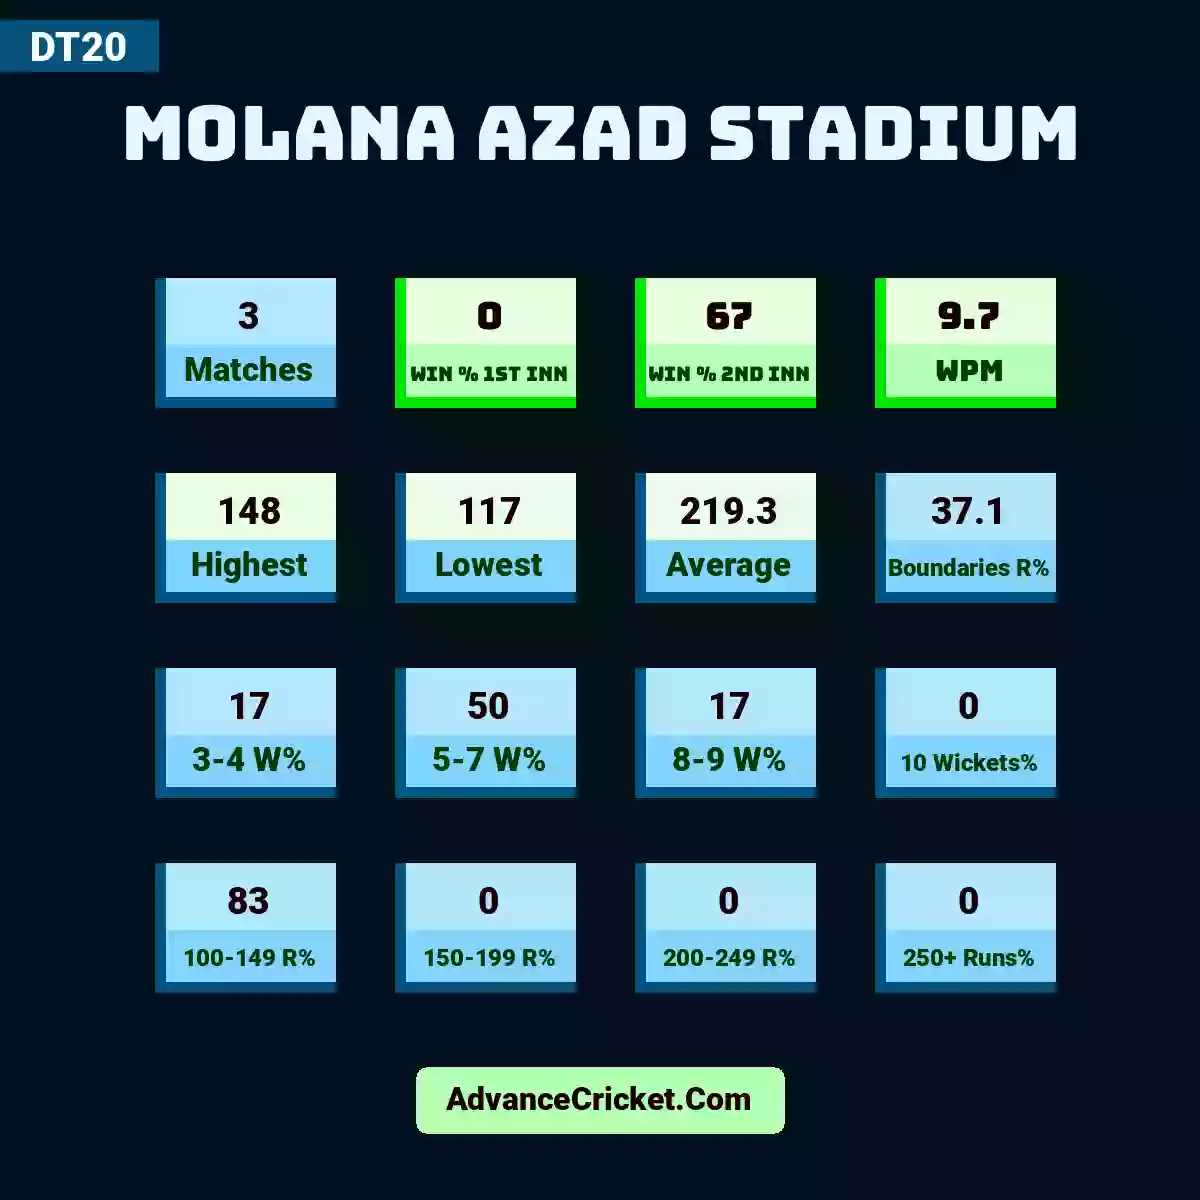 Image showing Molana Azad Stadium with Matches: 3, Win % 1st Inn: 0, Win % 2nd Inn: 67, WPM: 9.7, Highest: 148, Lowest: 117, Average: 219.3, Boundaries R%: 37.1, 3-4 W%: 17, 5-7 W%: 50, 8-9 W%: 17, 10 Wickets%: 0, 100-149 R%: 83, 150-199 R%: 0, 200-249 R%: 0, 250+ Runs%: 0.